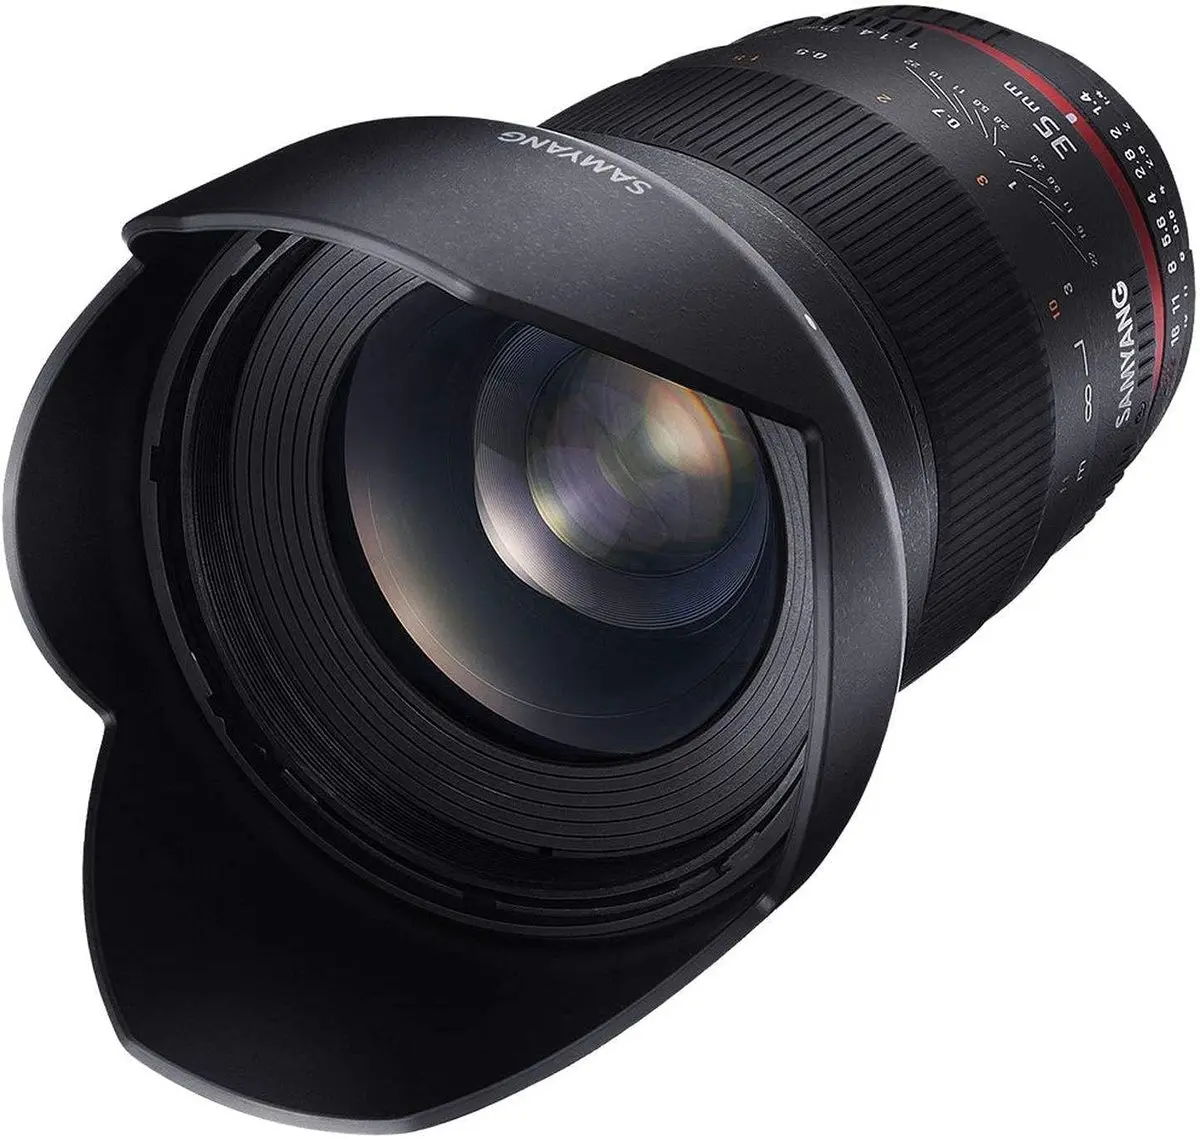 Main Image Samyang 35mm f/1.4 AS UMC (Canon AE Version) Lens